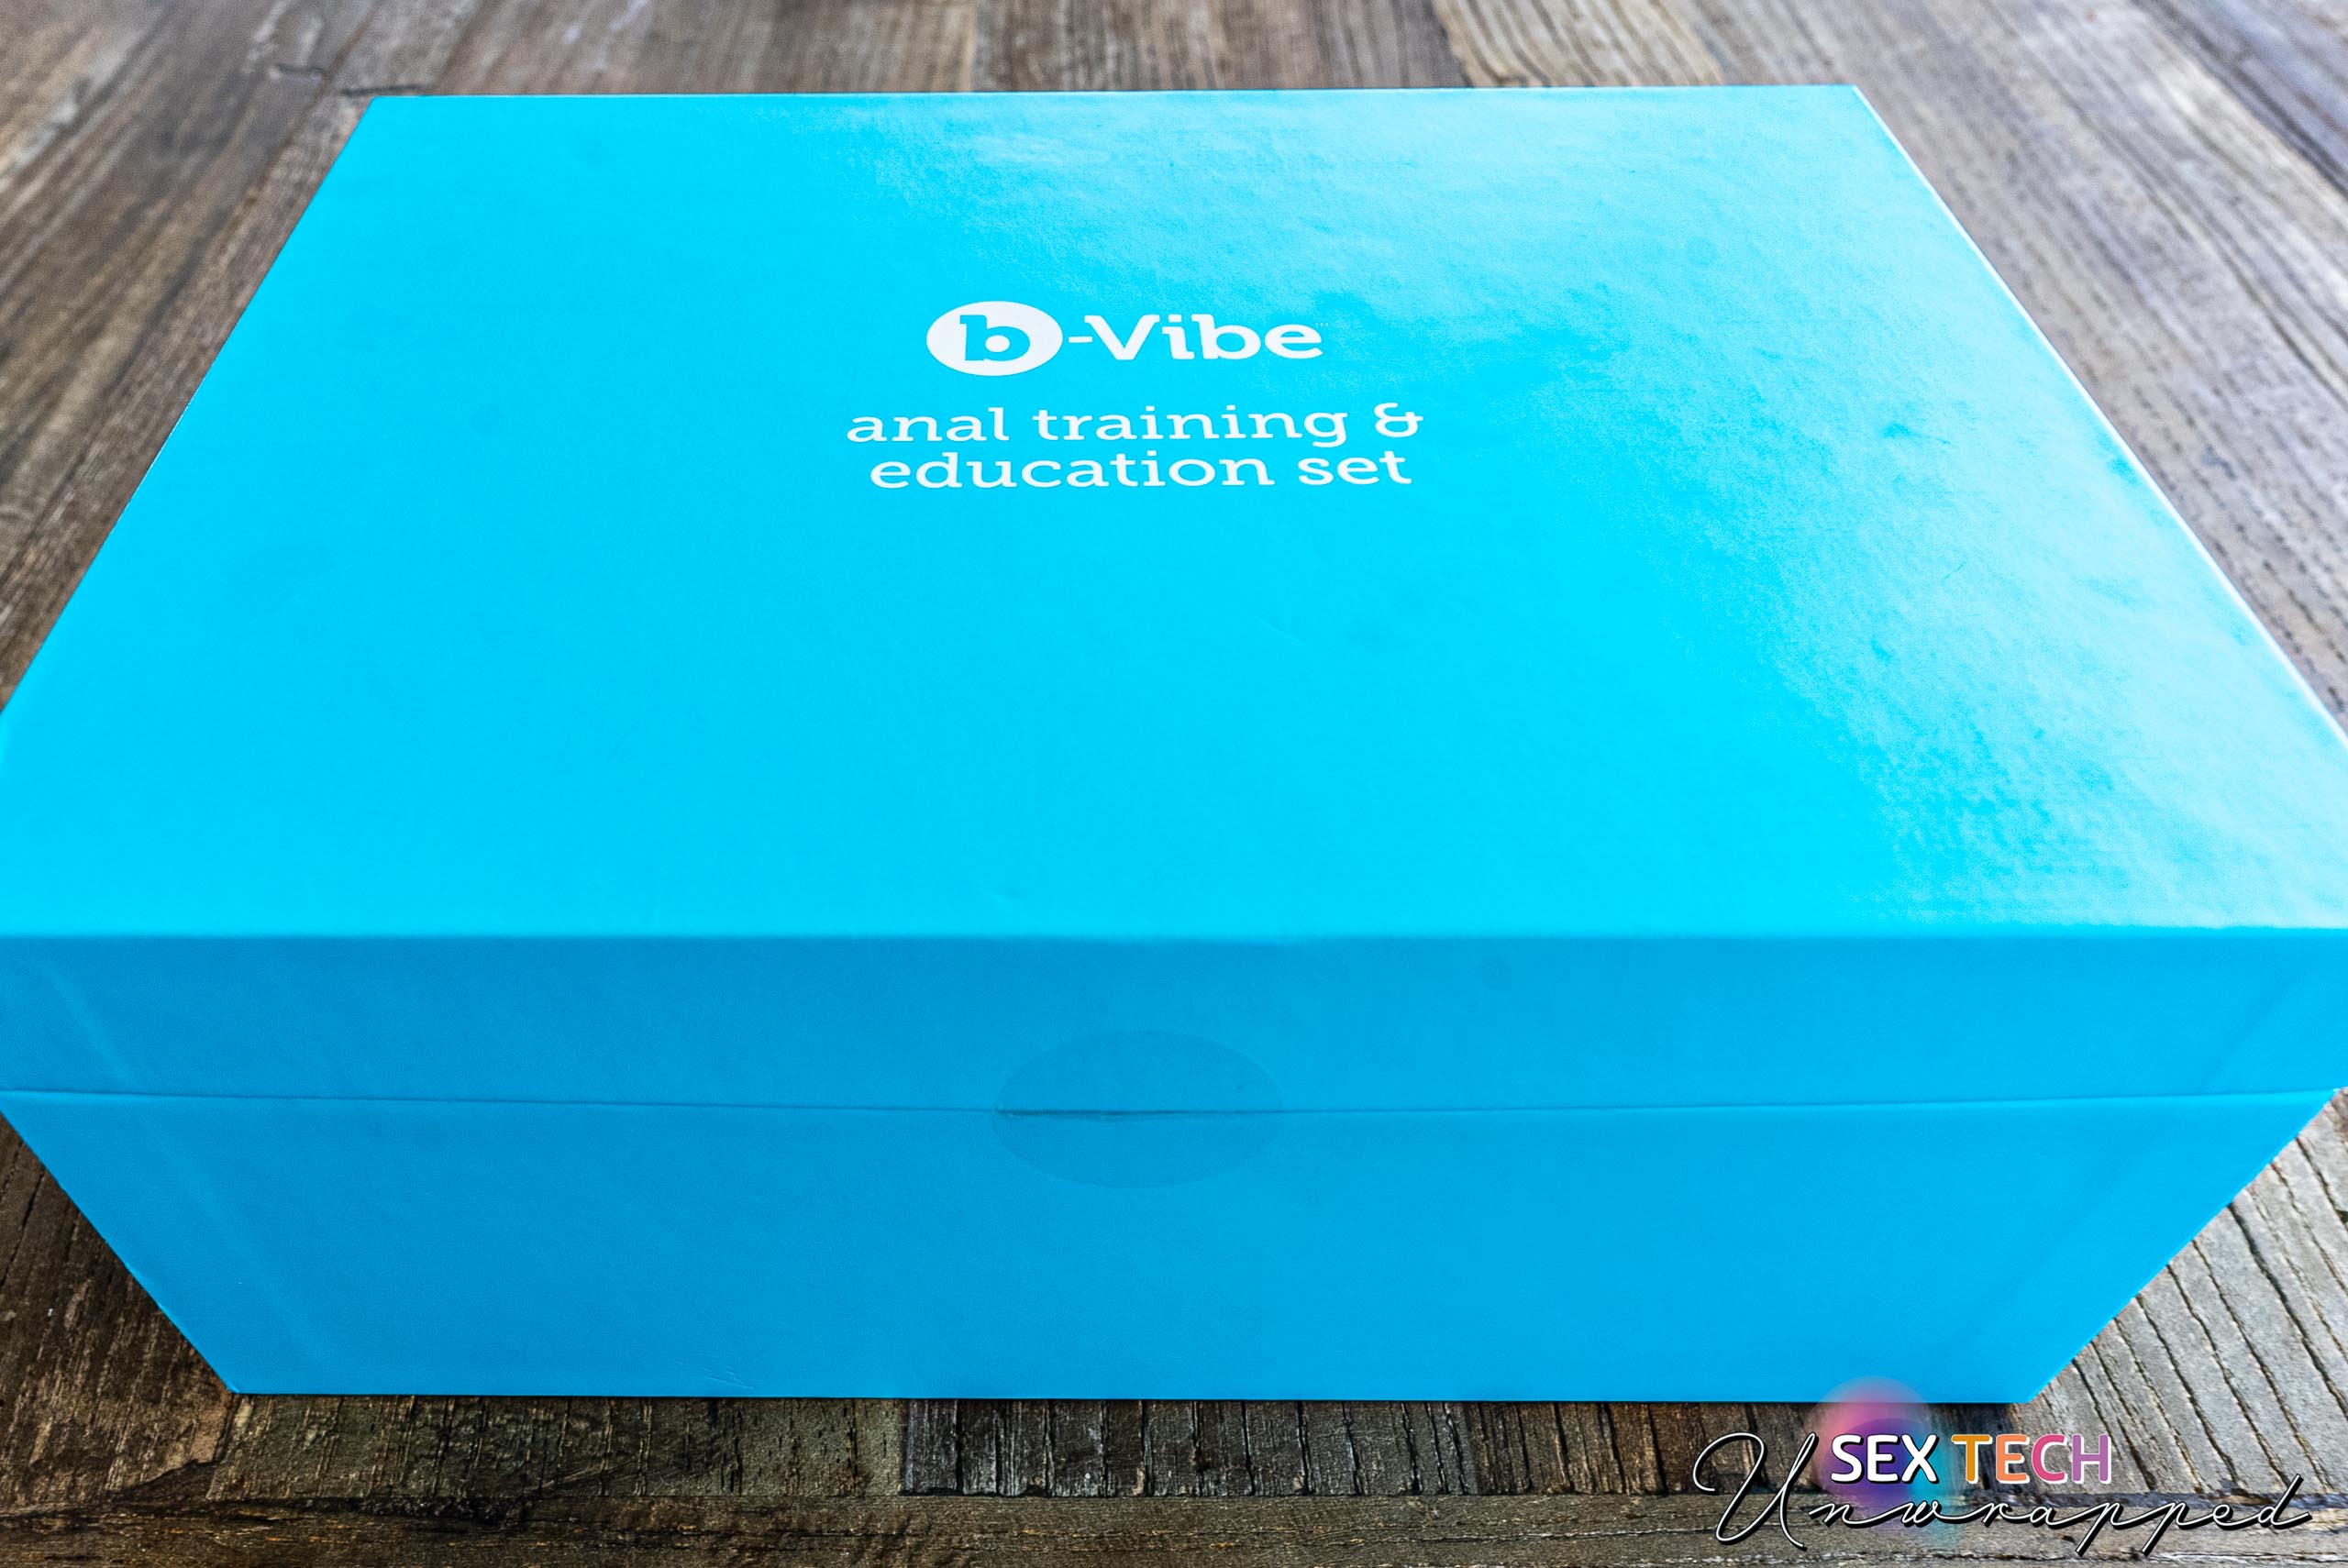 b-Vibe anal training and education set box